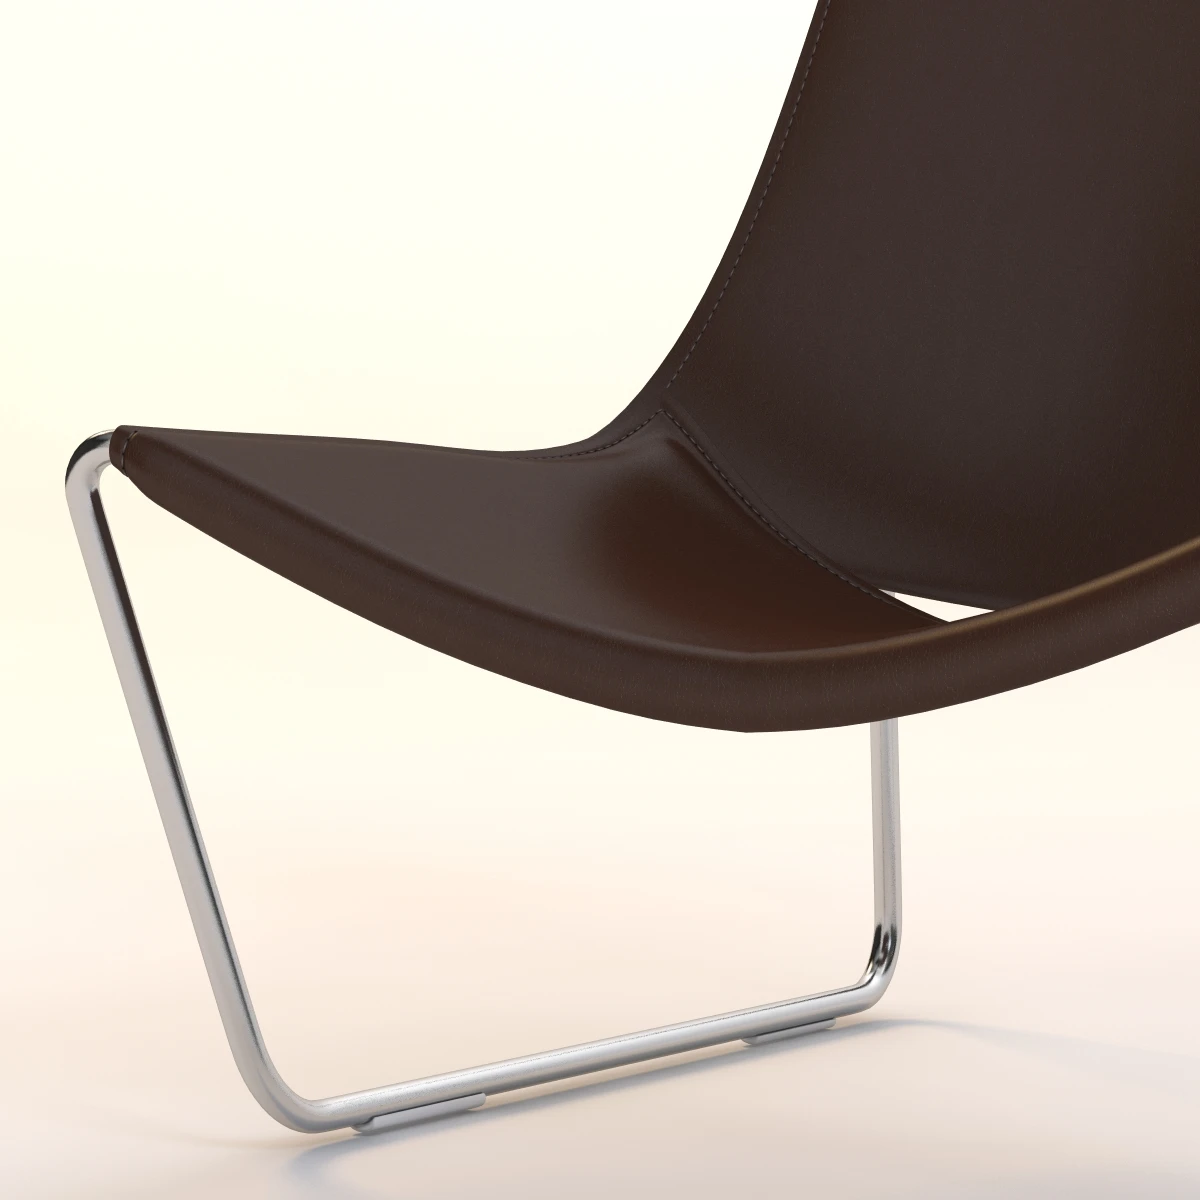 Valitalia Apelle Chair 3D Model_05